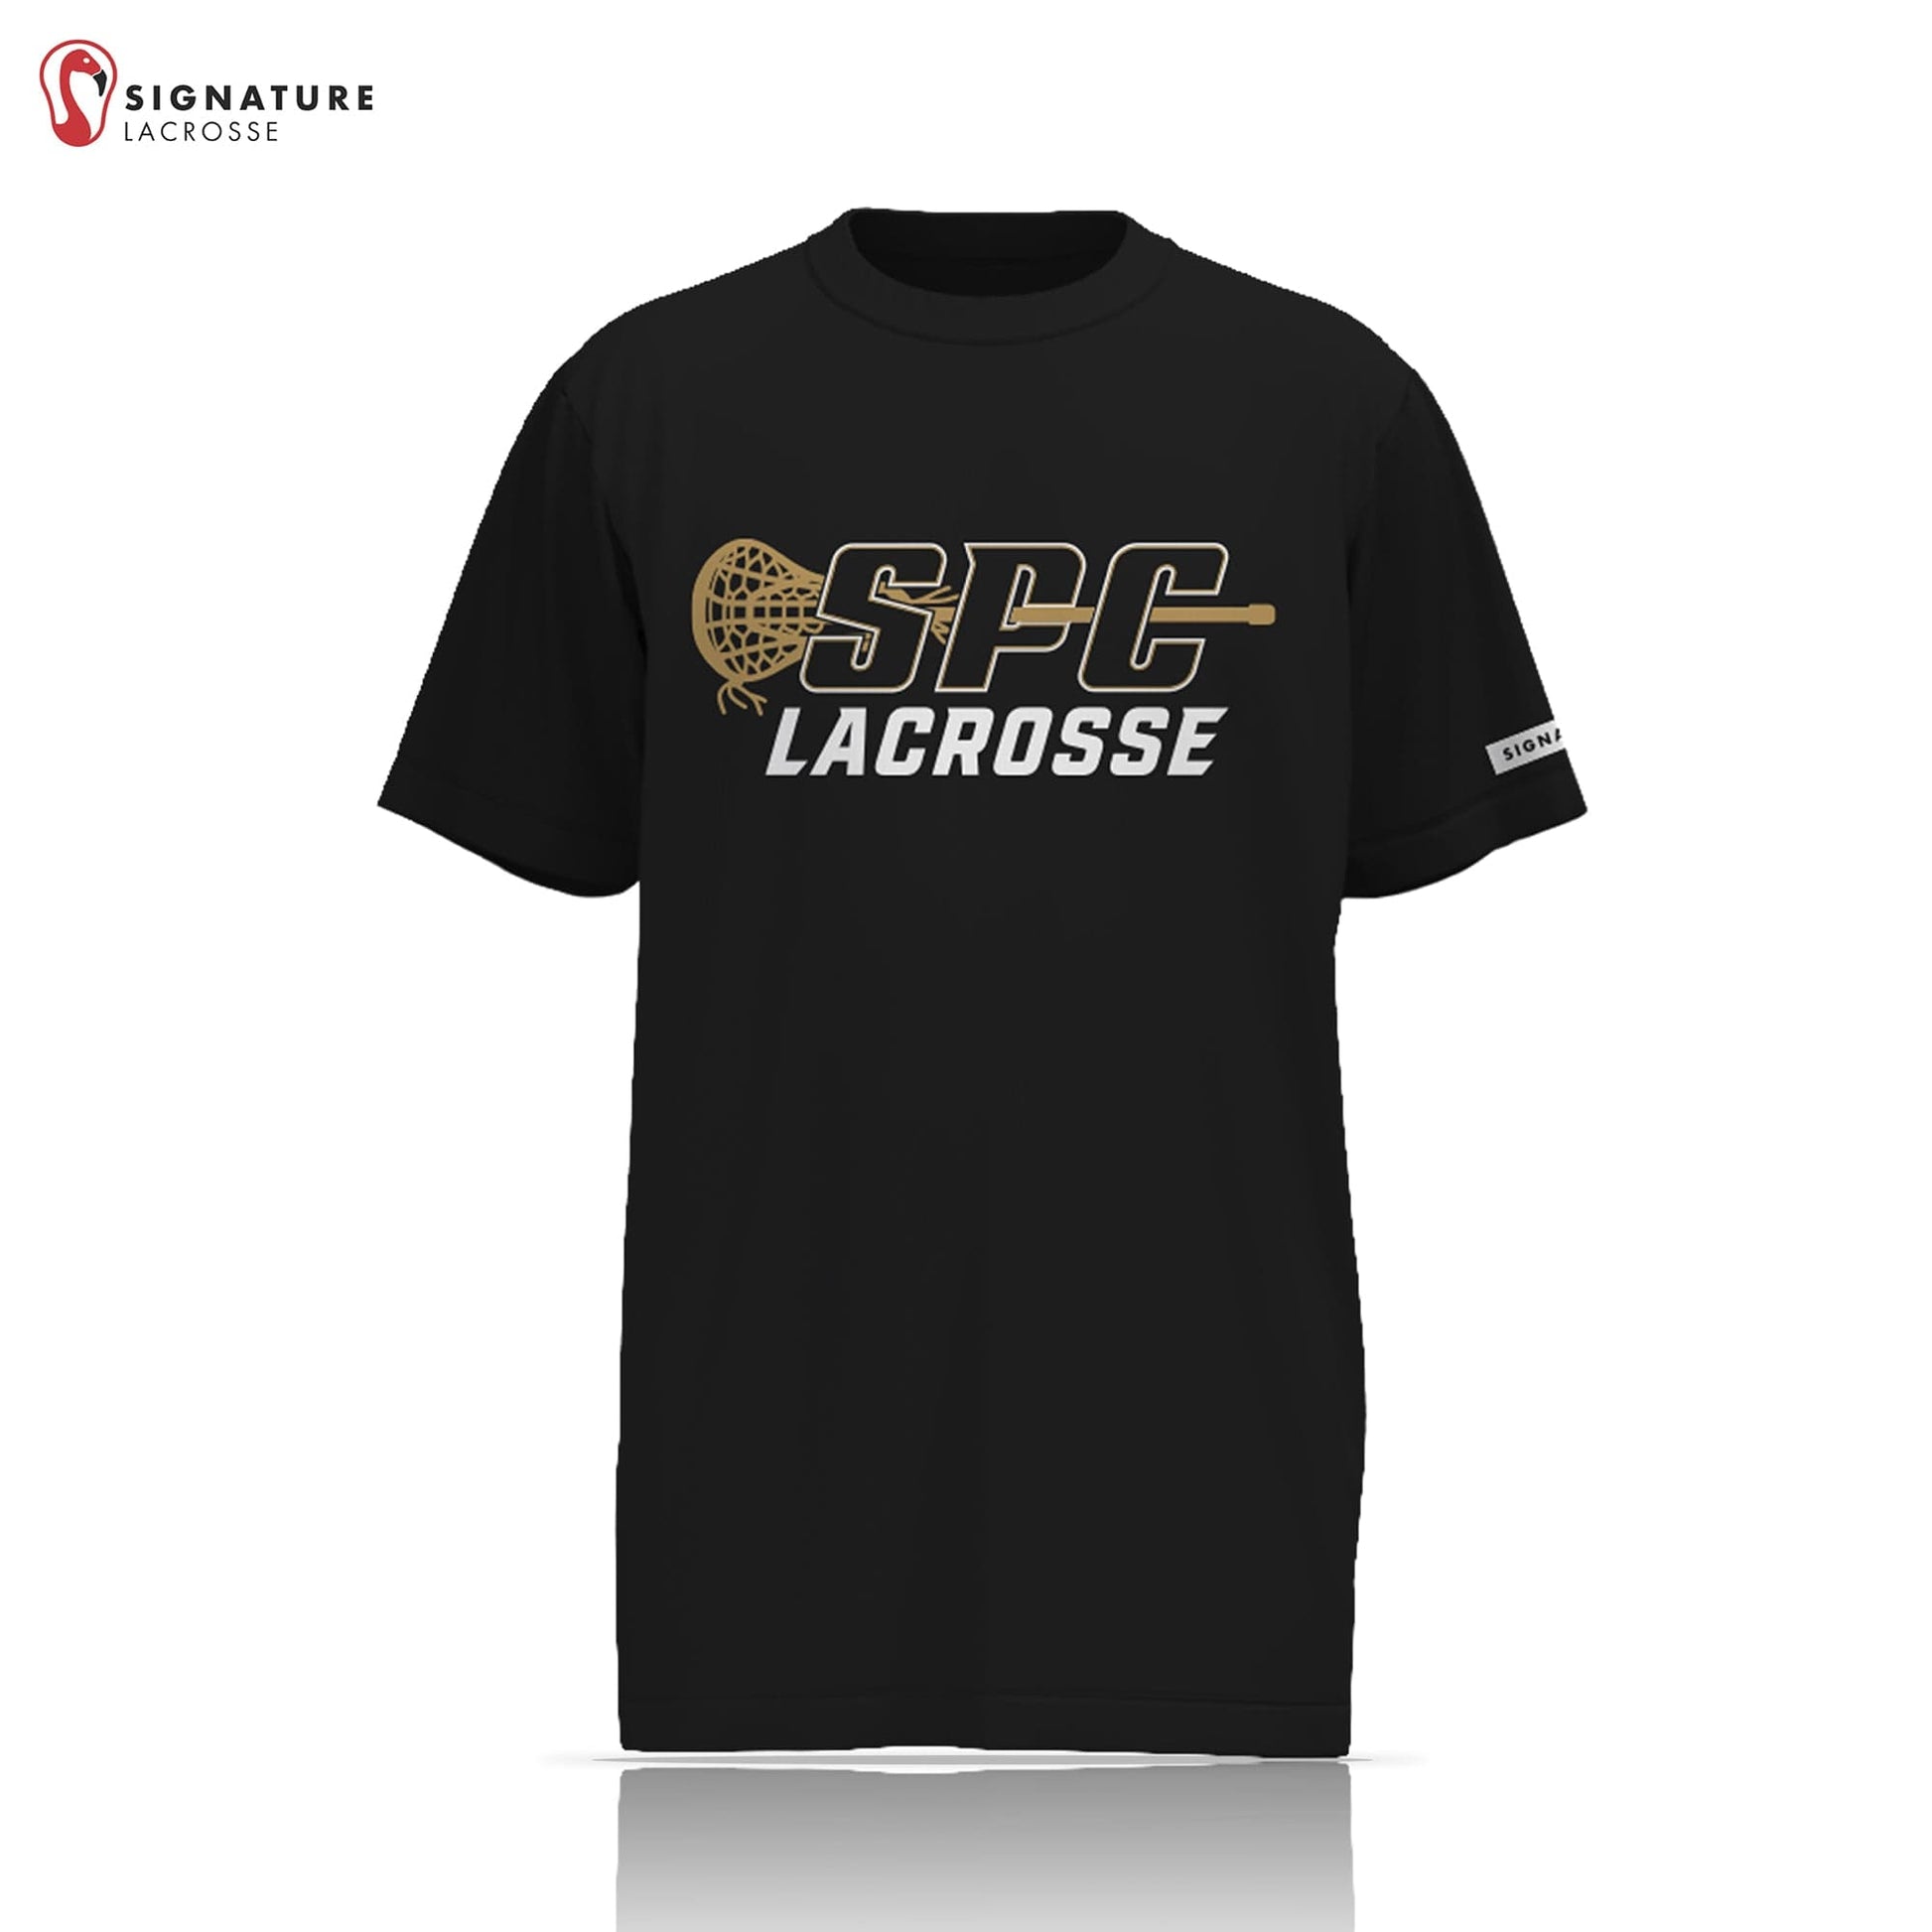 St. Pete Catholic Lacrosse Short Sleeve Shooter Shirt: St. Pete Signature Lacrosse